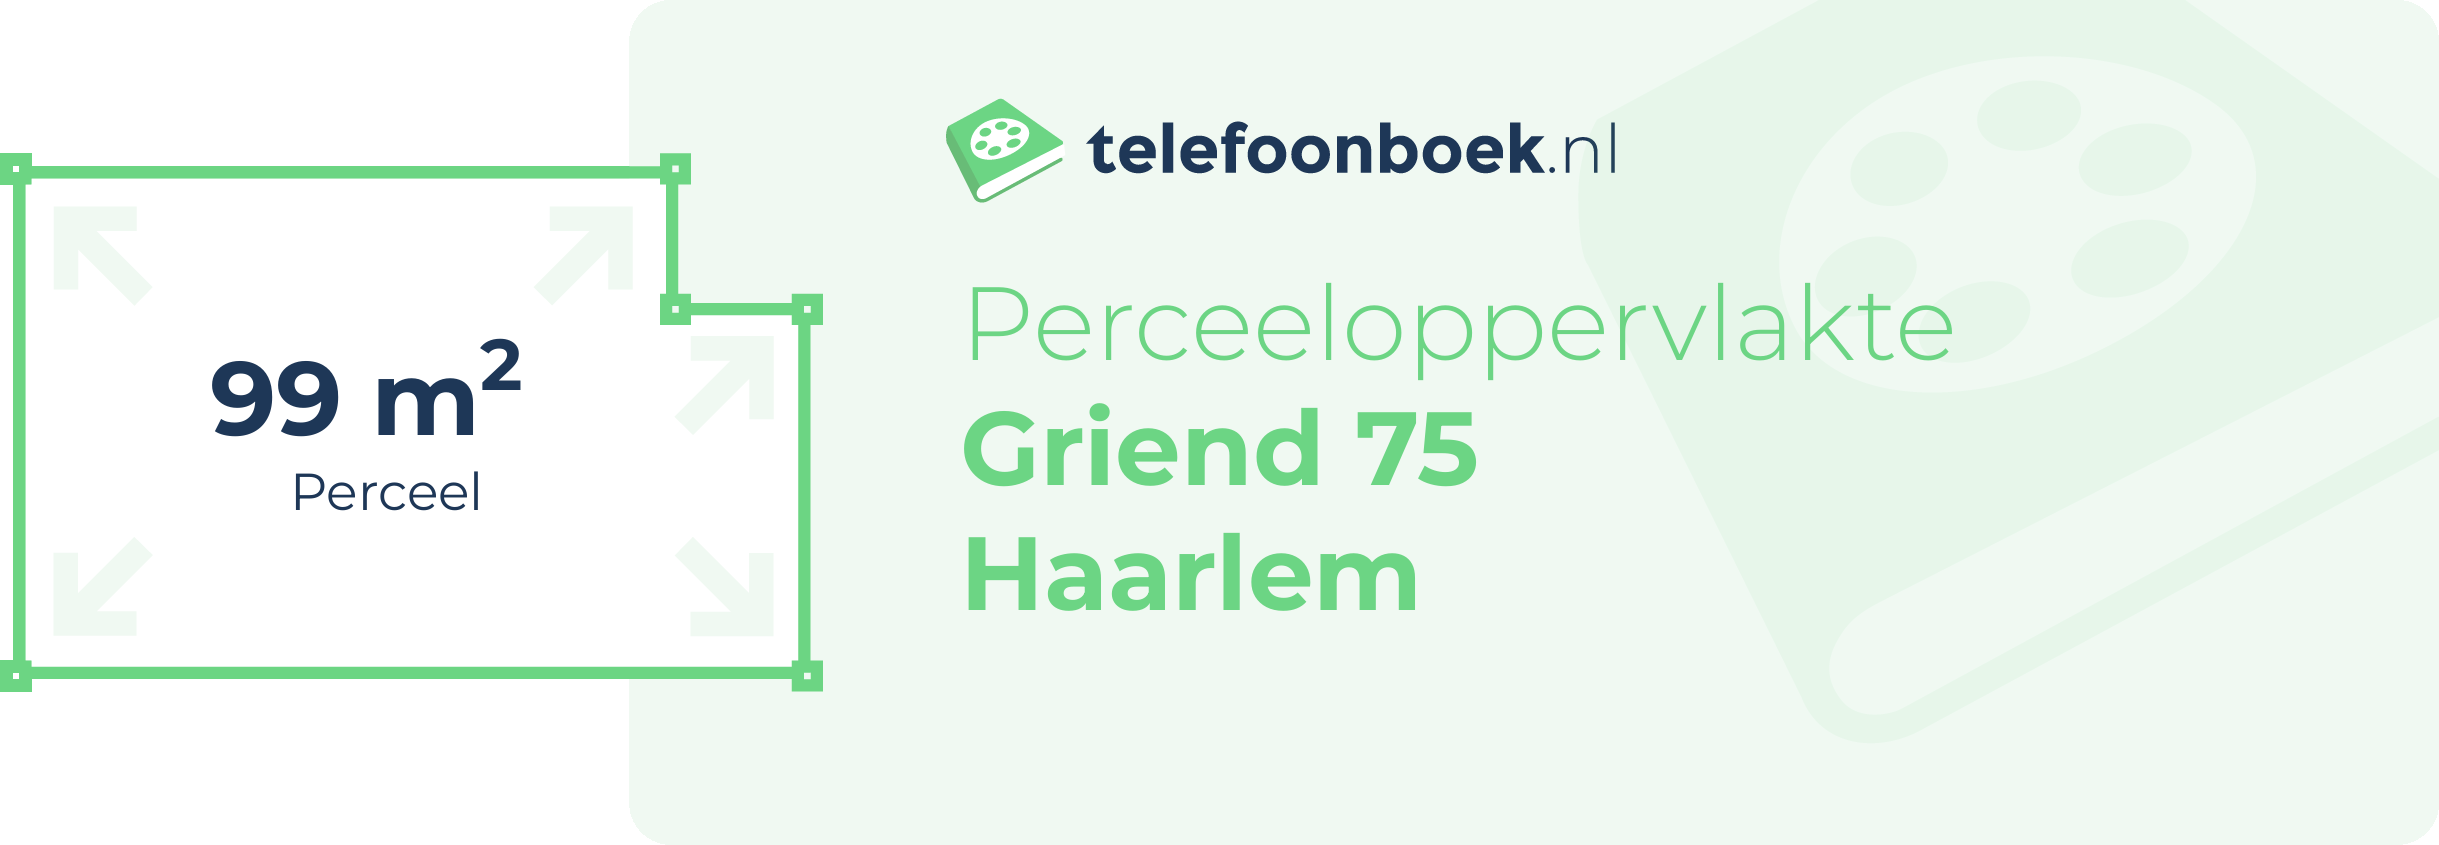 Perceeloppervlakte Griend 75 Haarlem